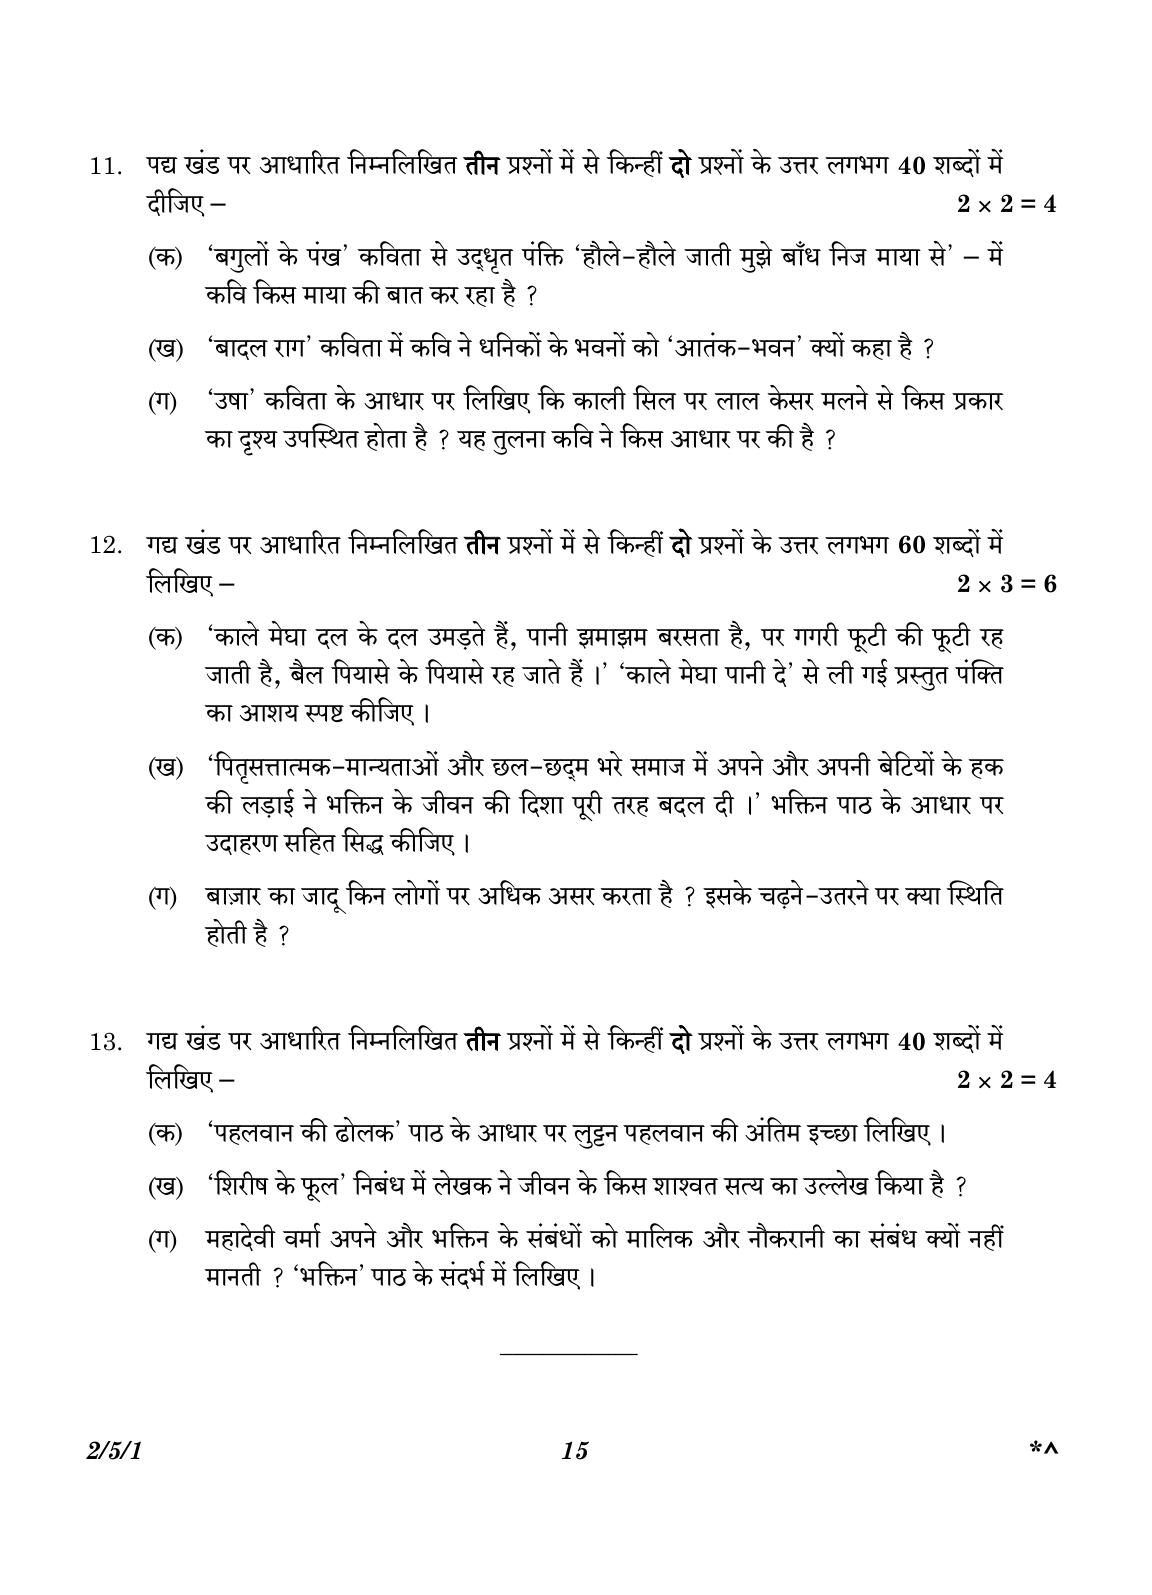 CBSE Class 12 2-5-1 Hindi Core version 2023 Question Paper - Page 15